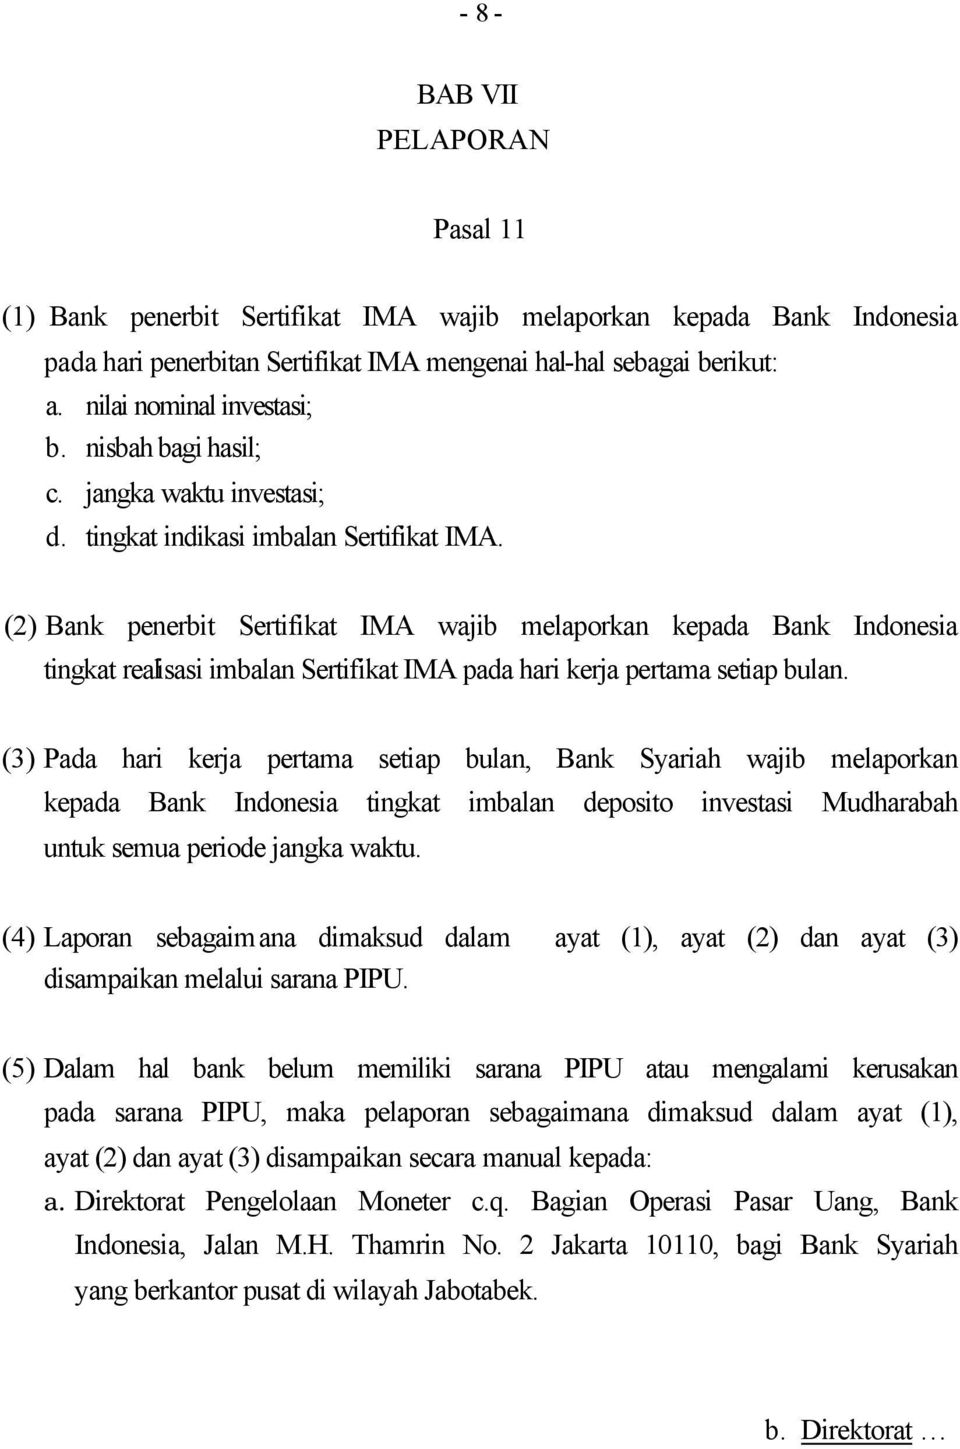 (2) Bank penerbit Sertifikat IMA wajib melaporkan kepada Bank Indonesia tingkat realisasi imbalan Sertifikat IMA pada hari kerja pertama setiap bulan.